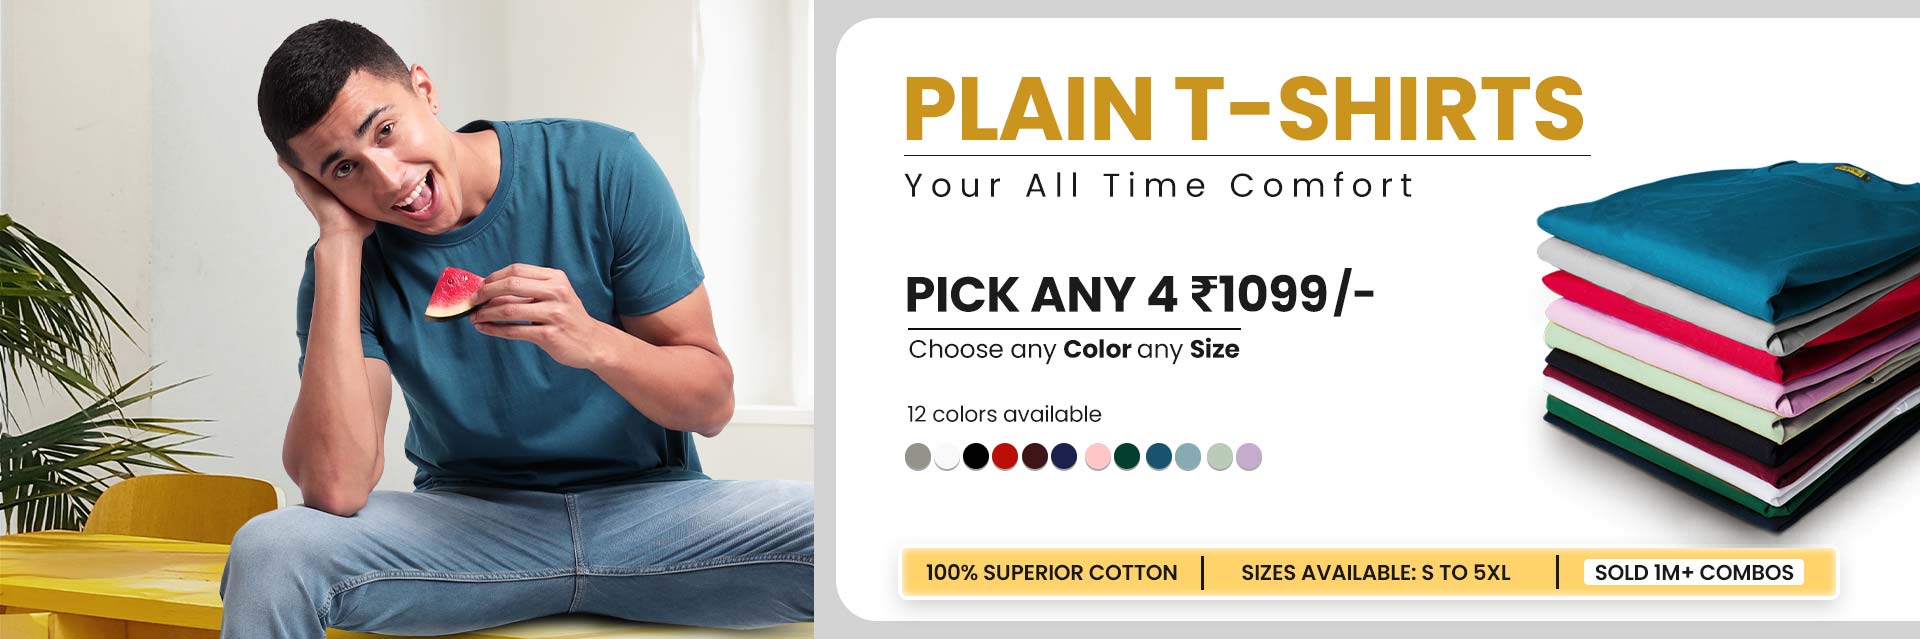 plain t-shirts-for-men